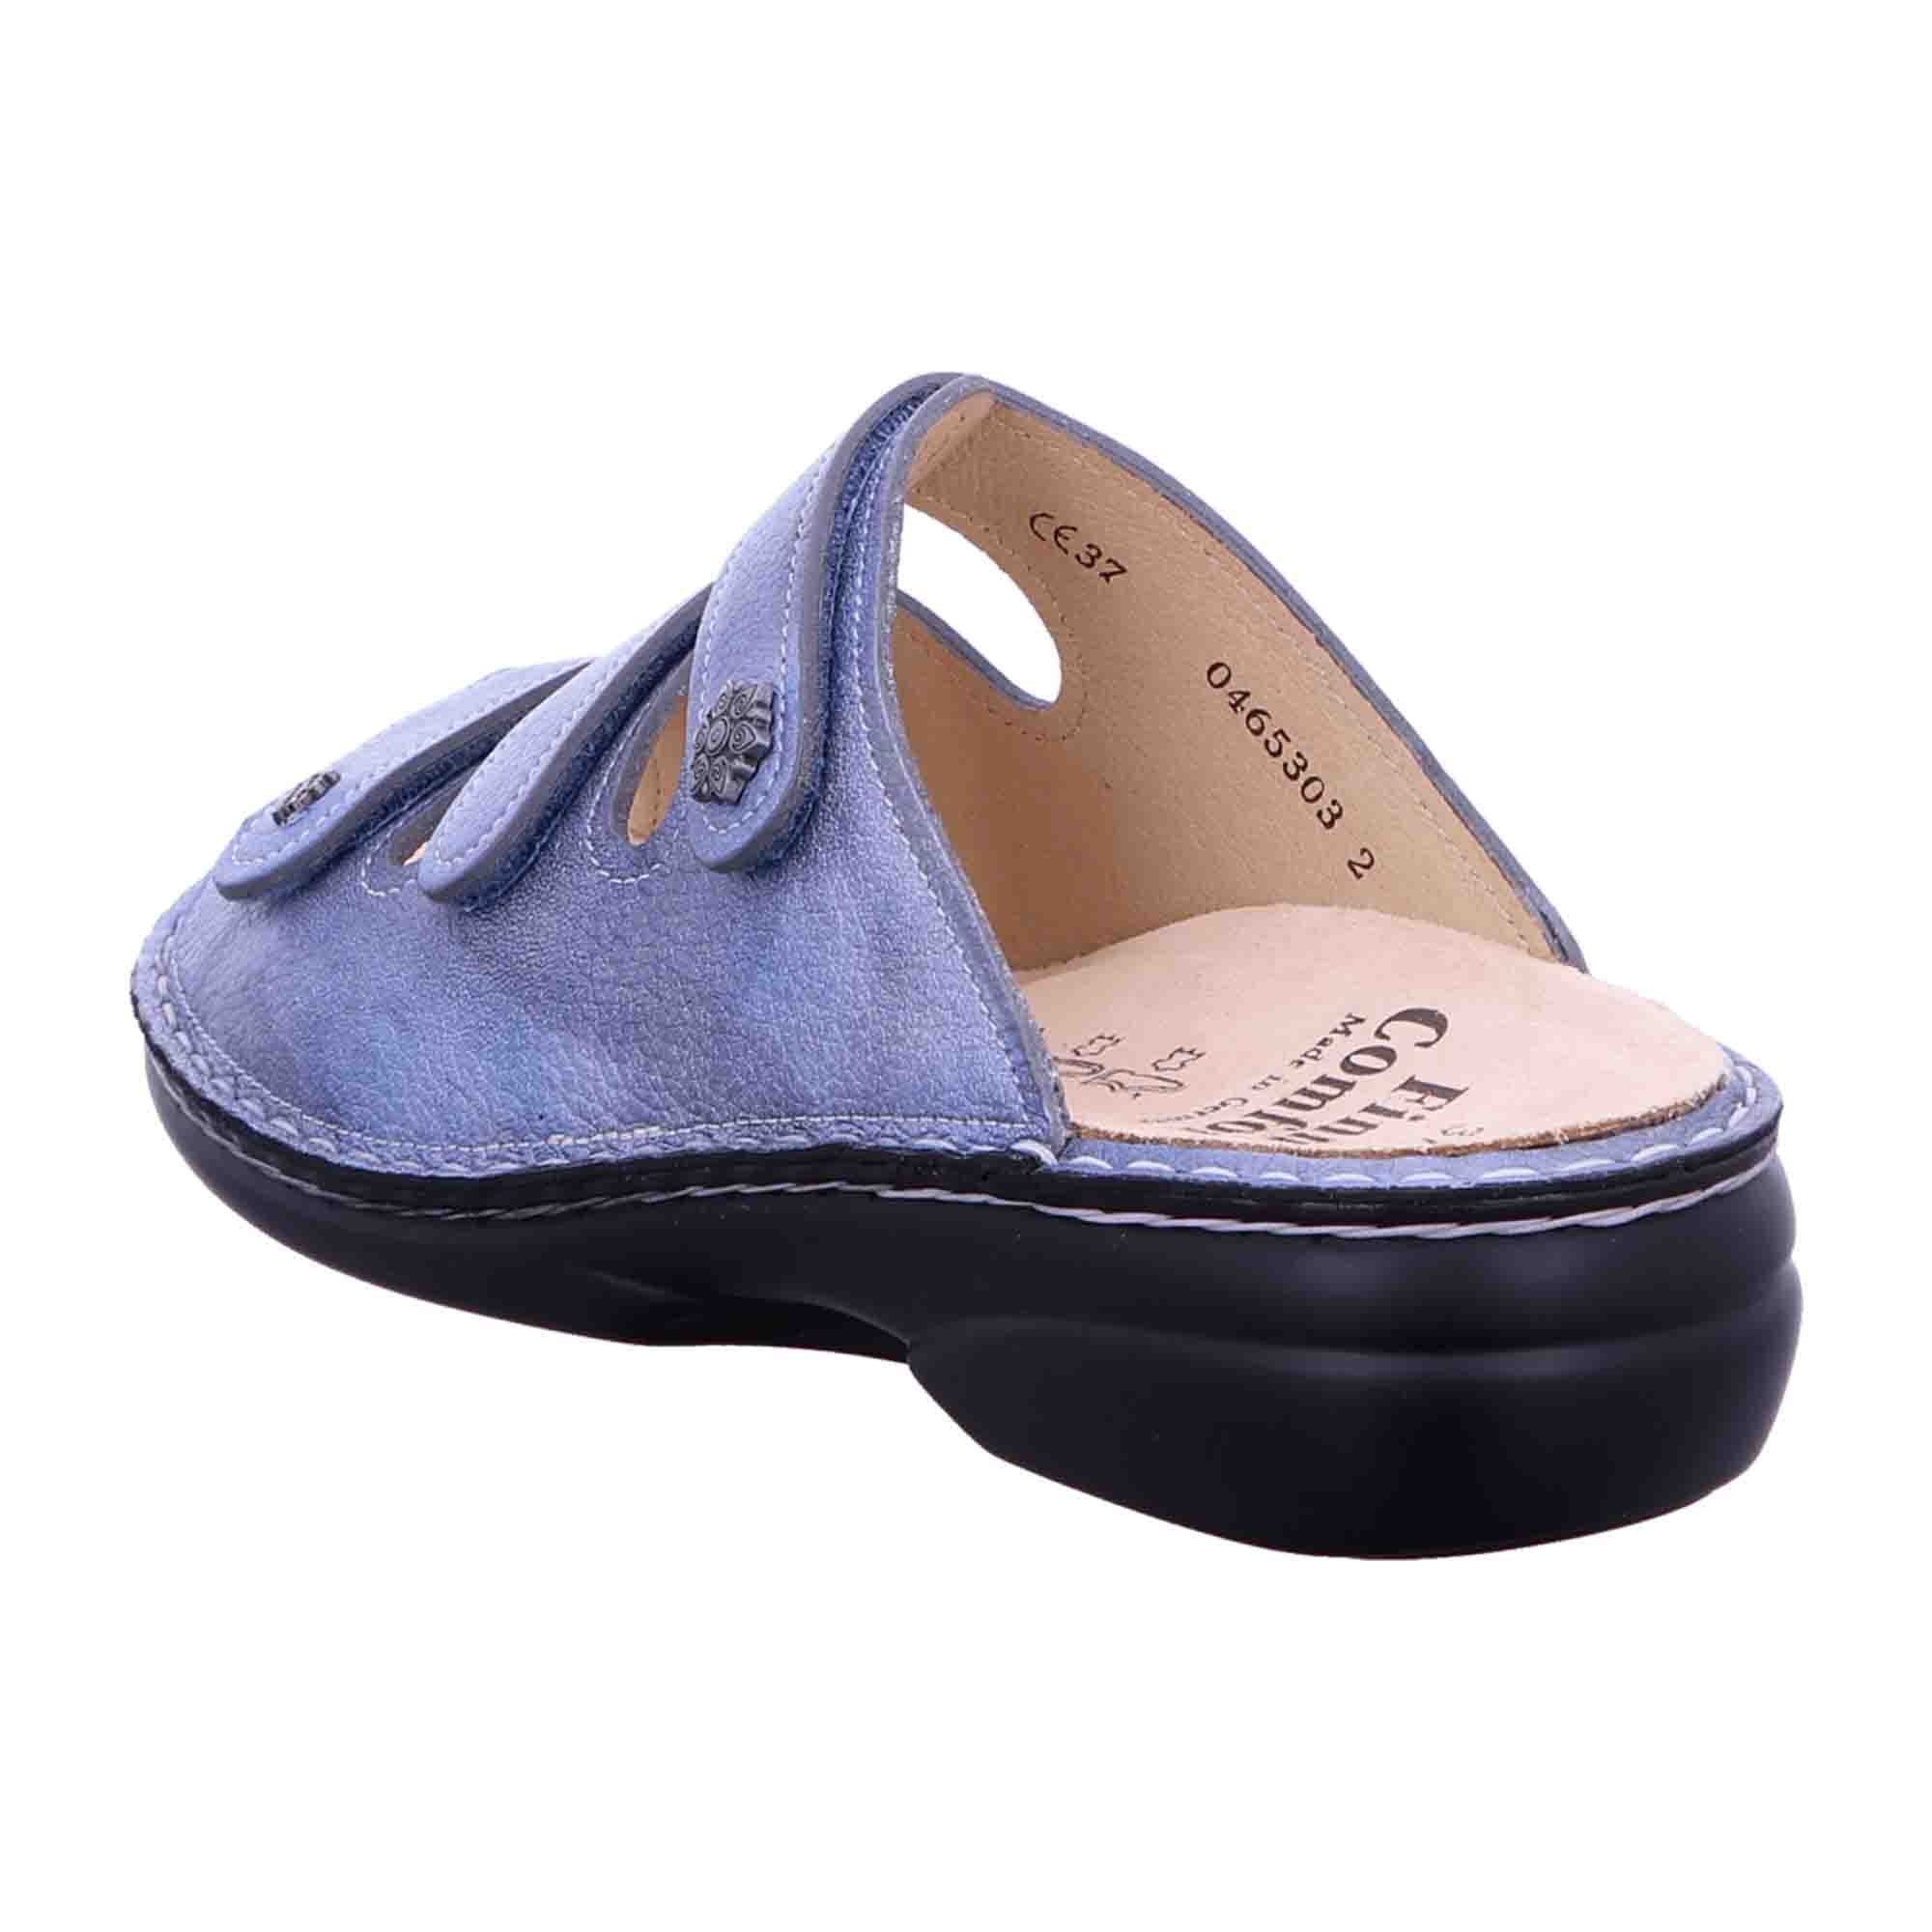 Finn Comfort Menorca-S C Women's Blue Sandals - Stylish & Durable